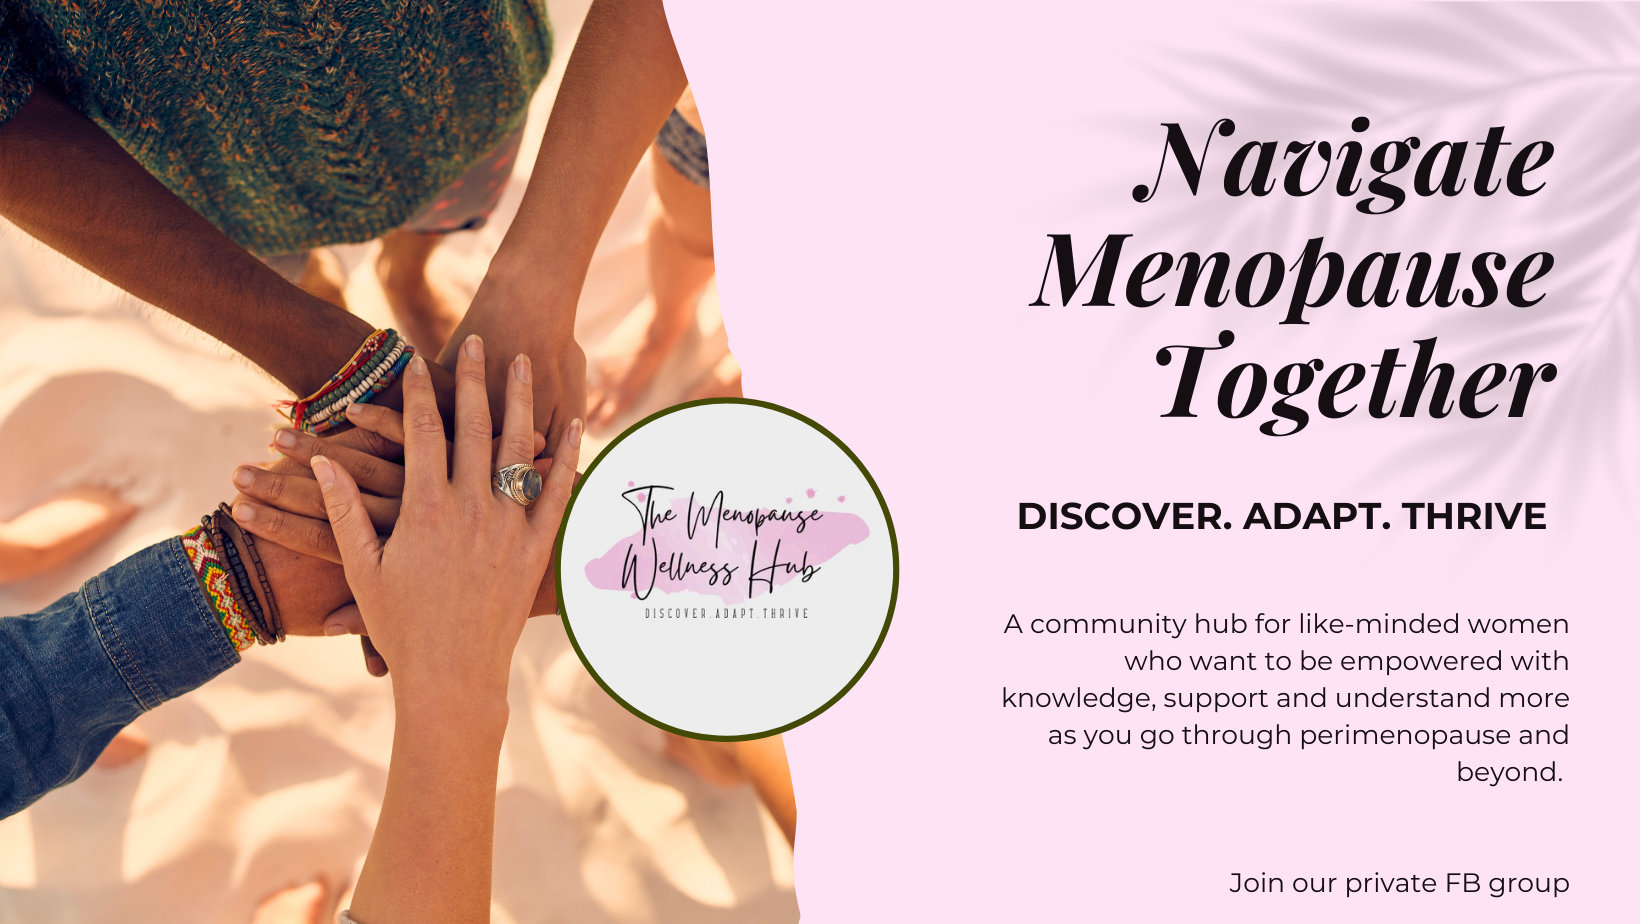 Helping women navigate through menopause